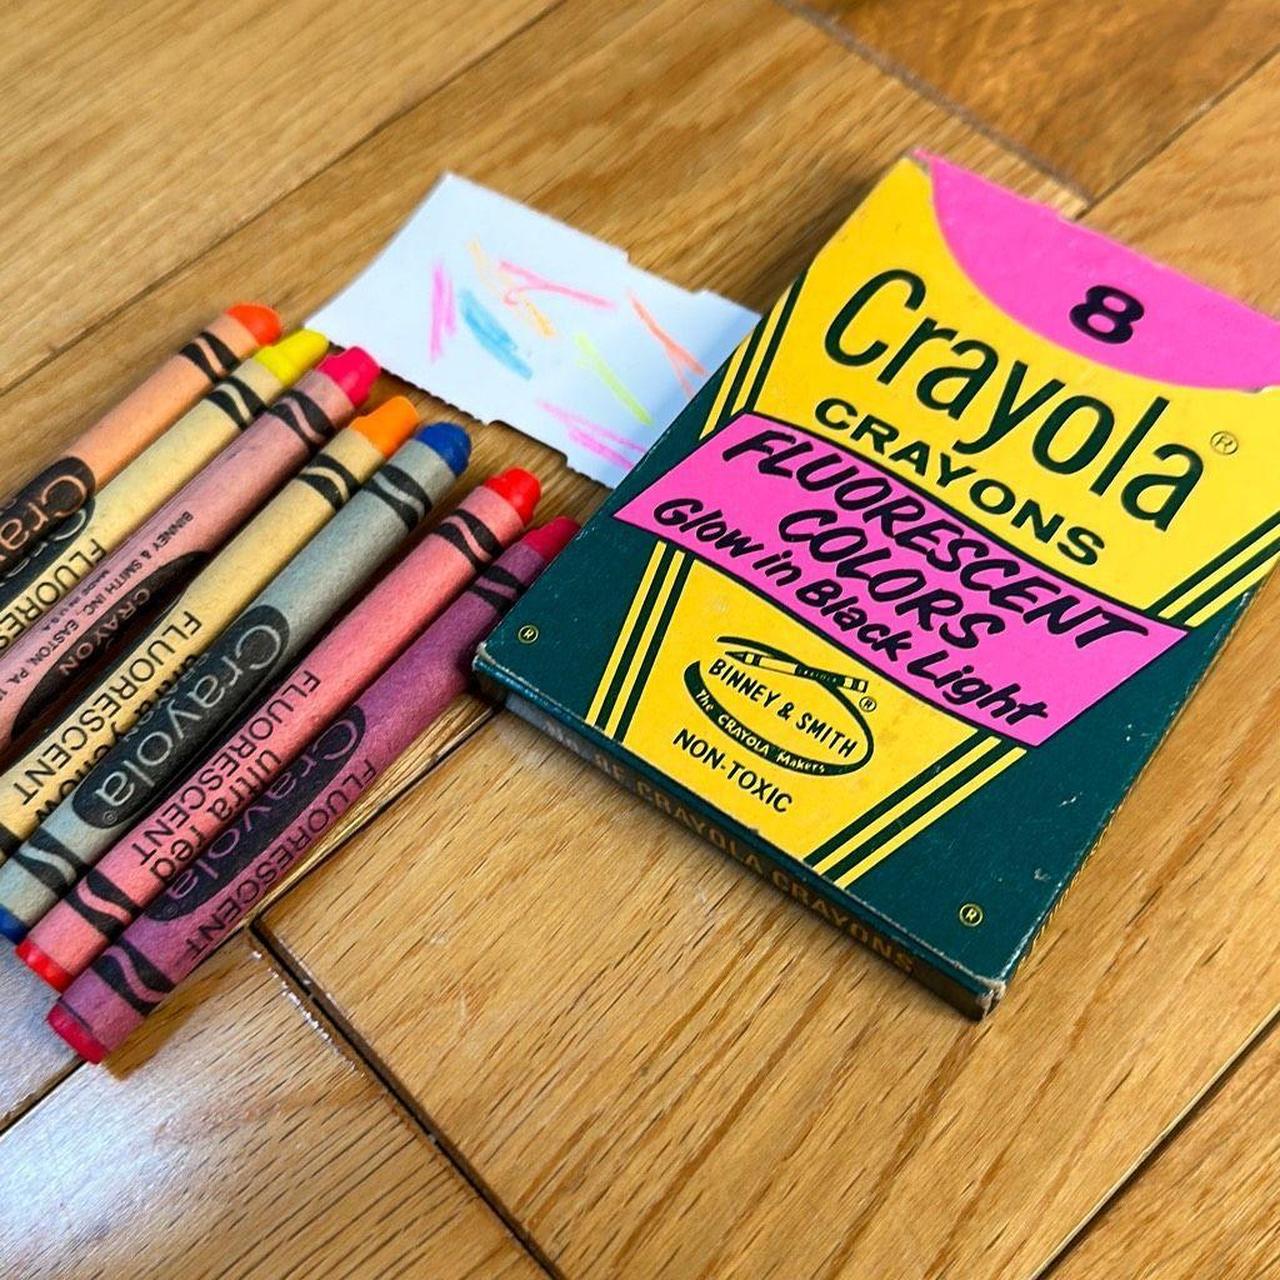 Vintage Jumbo Crayola Crayons Fluorescent Colors, Binney & Smith